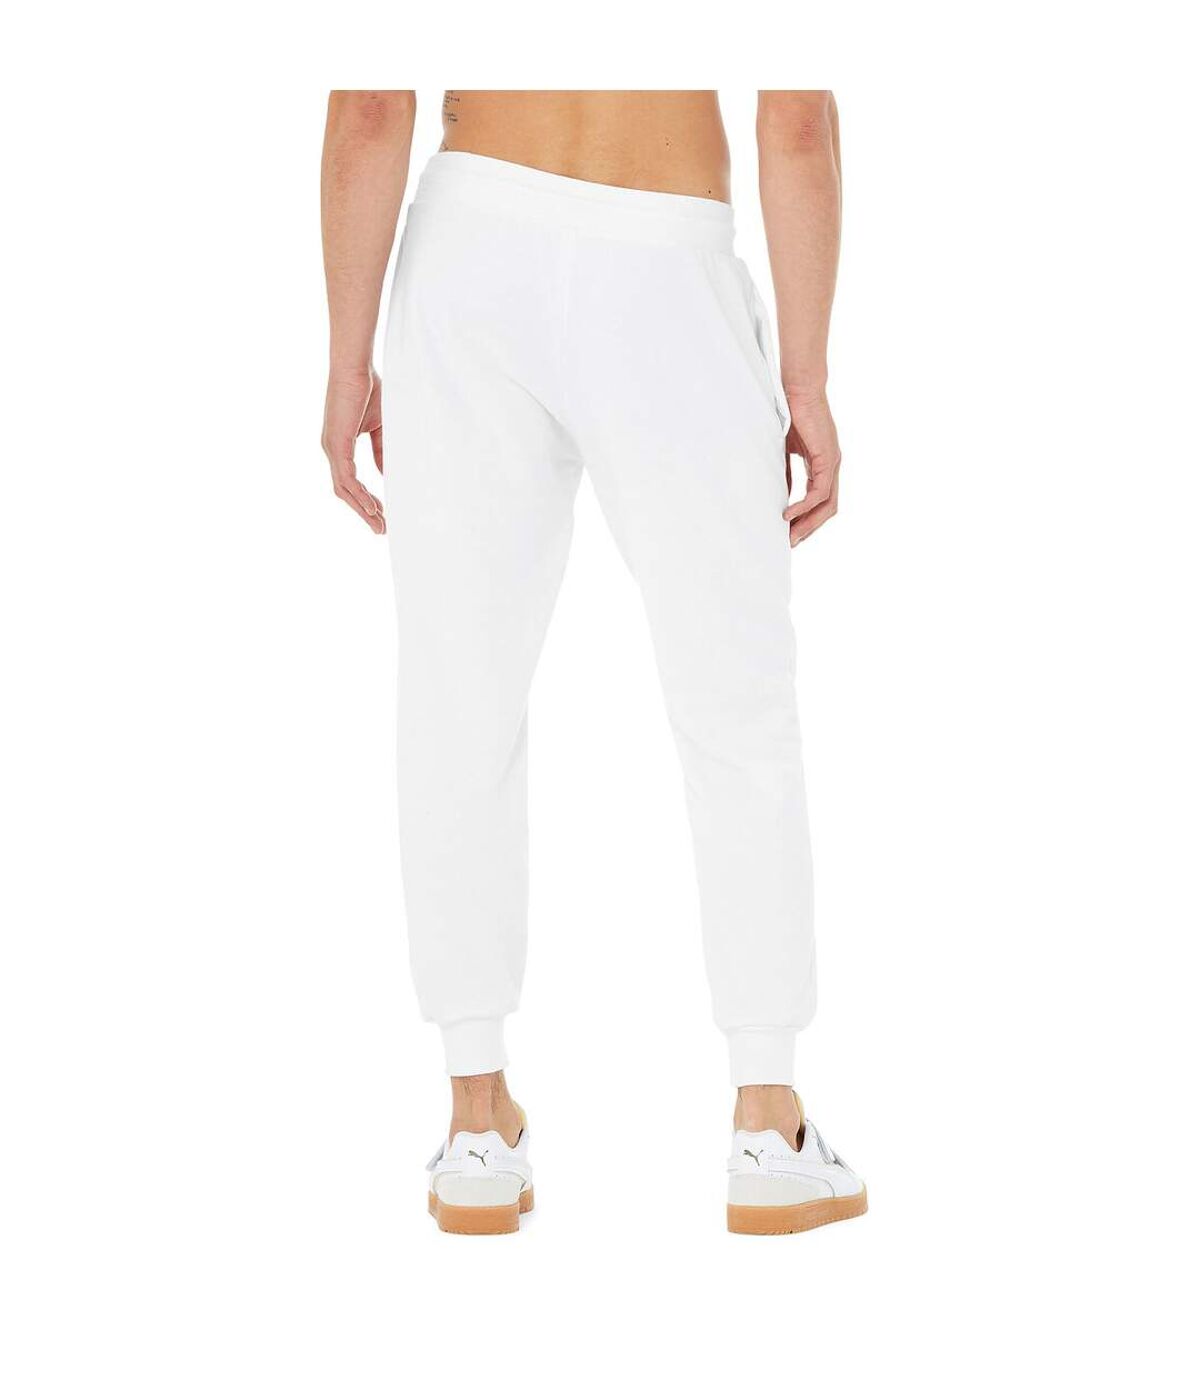 Bella + Canvas - Pantalon de jogging - Adulte (Blanc) - UTPC4884